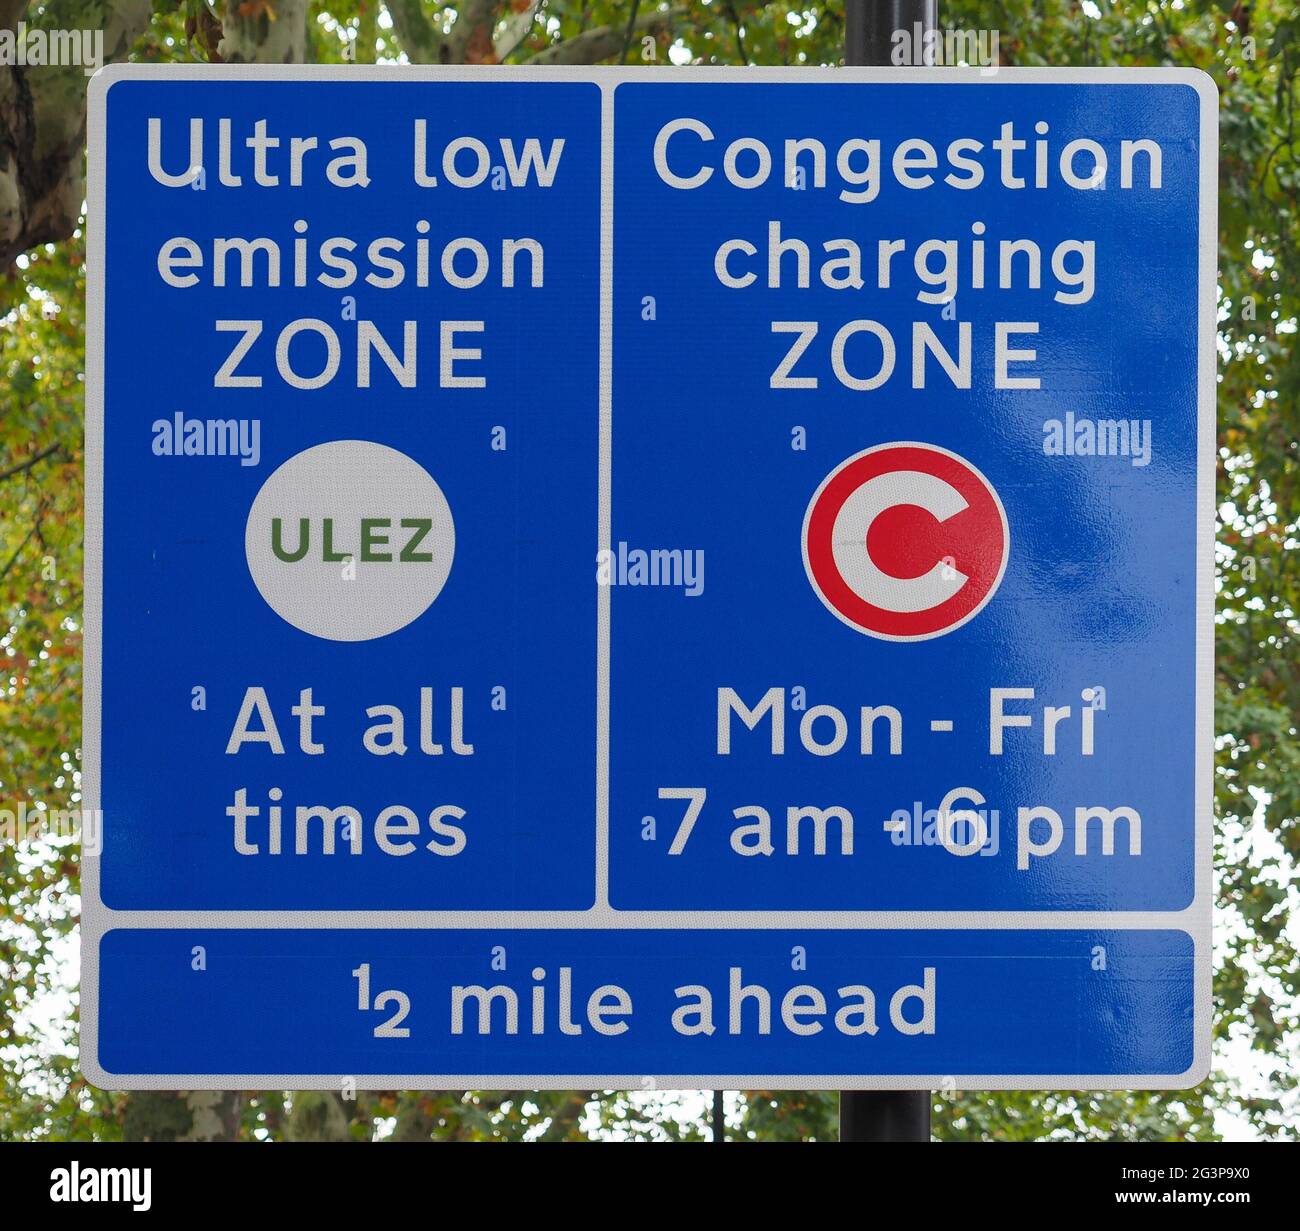 ULEZ (Ultra low emission zone) and C (Congestion charging zone) Stock Photo